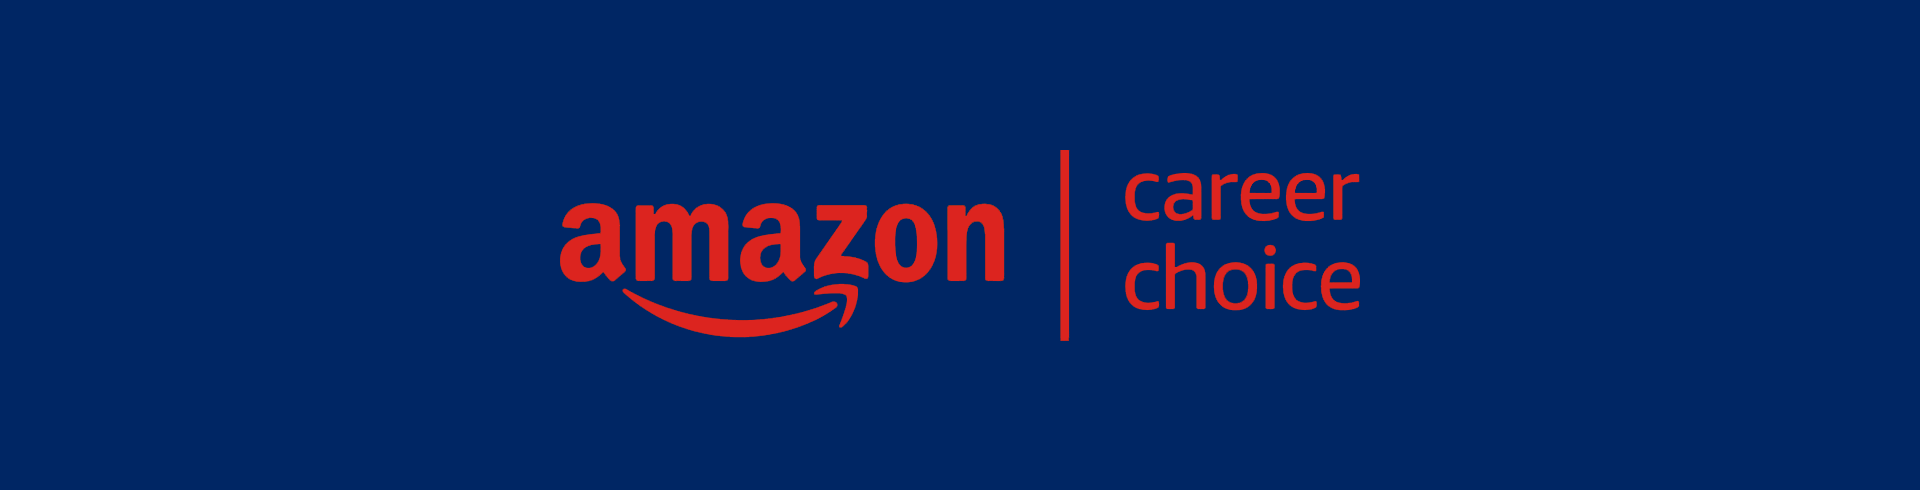 Amazon Career Services